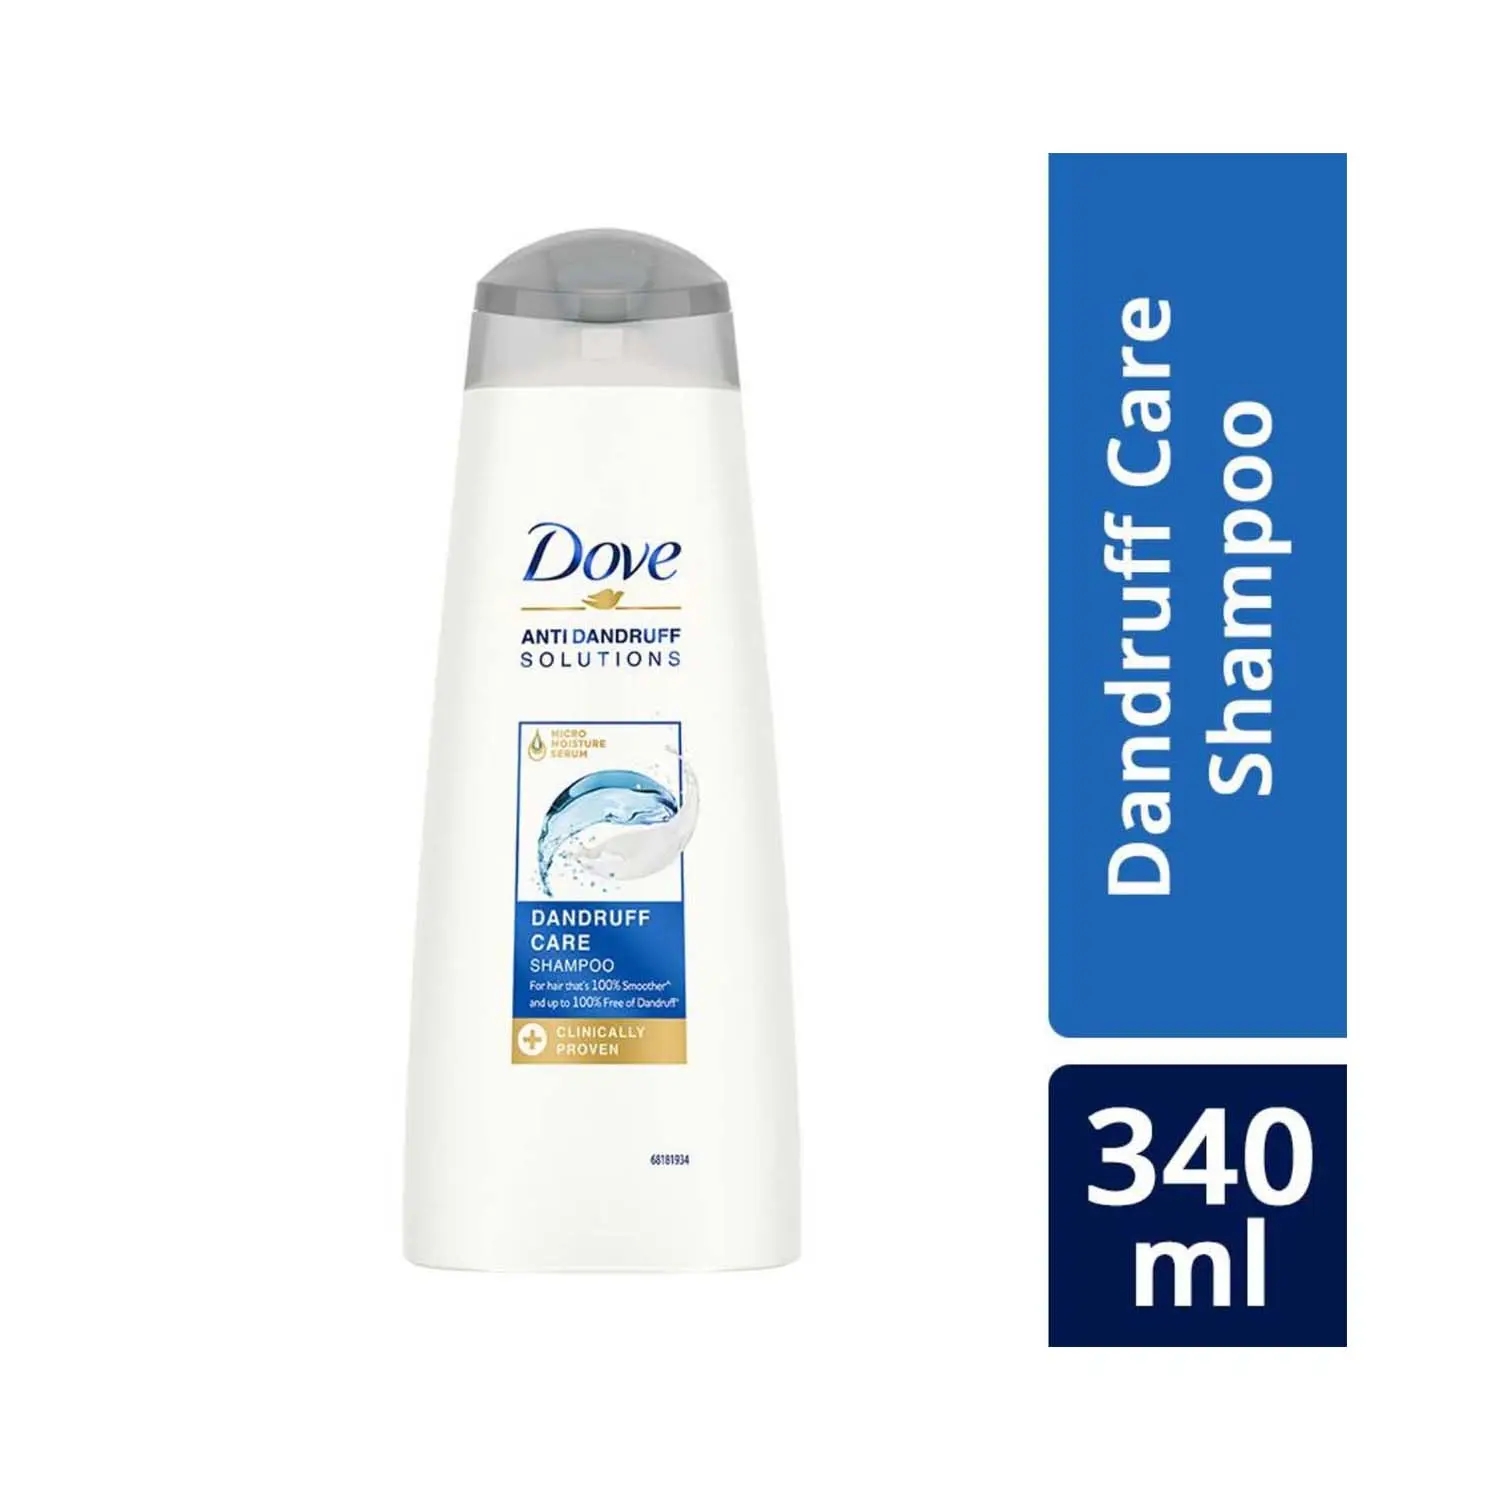 Dove | Dove Dandruff Care Hair Shampoo (340ml)